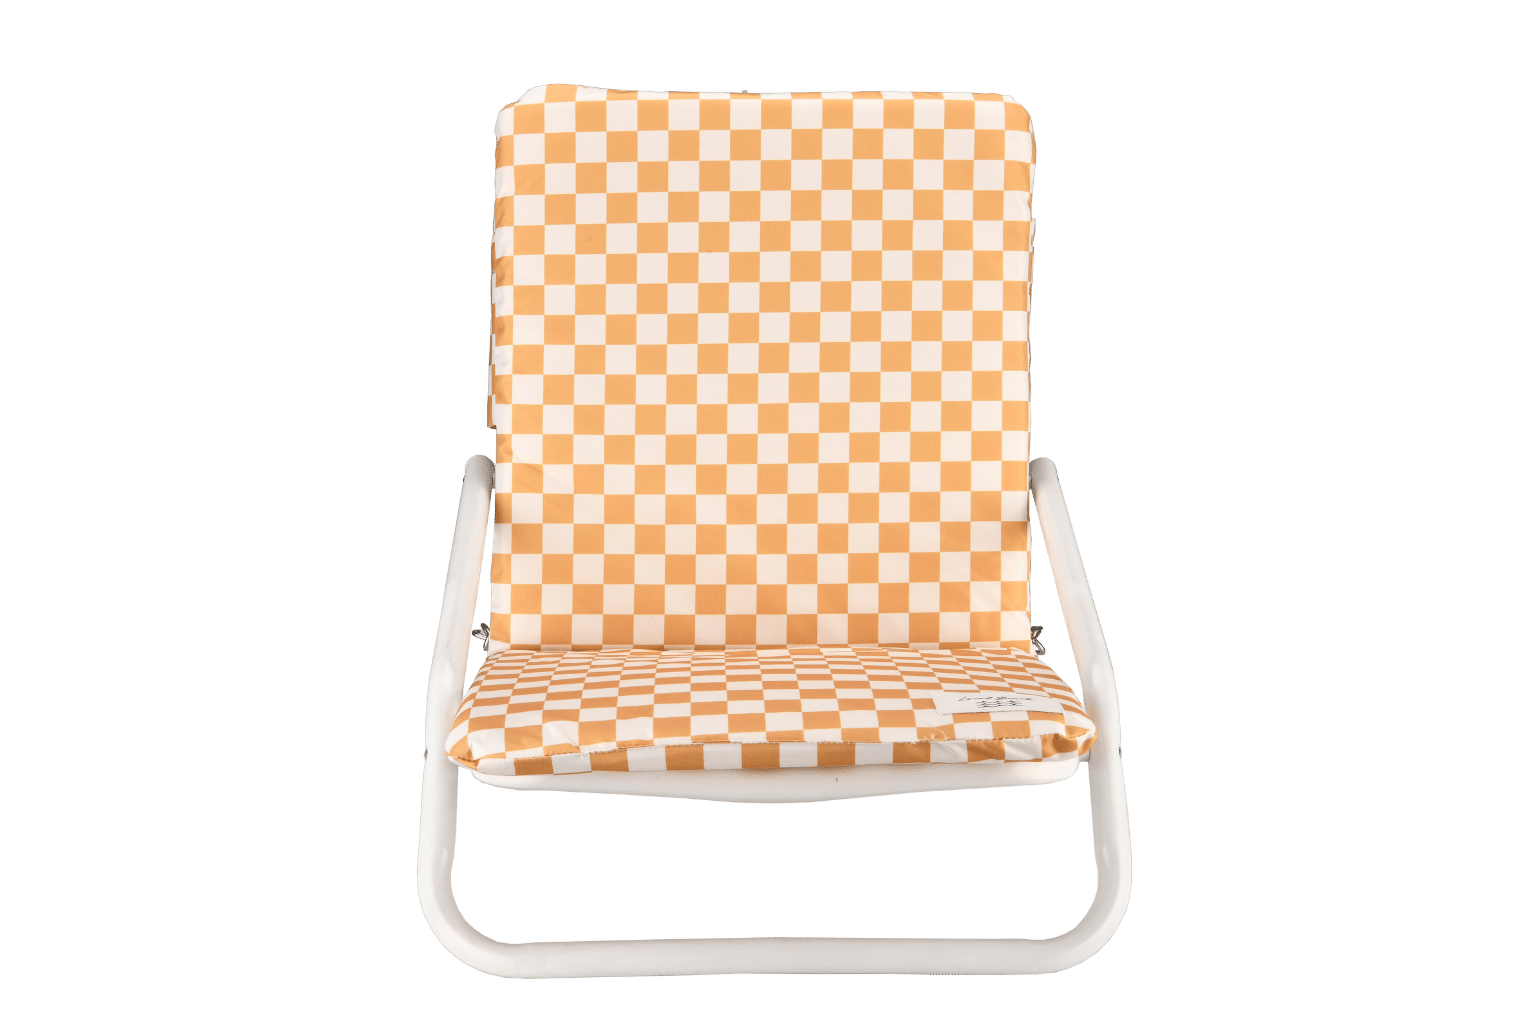 The Outdoor Checker Blanket by Local Beach – LocalBeach